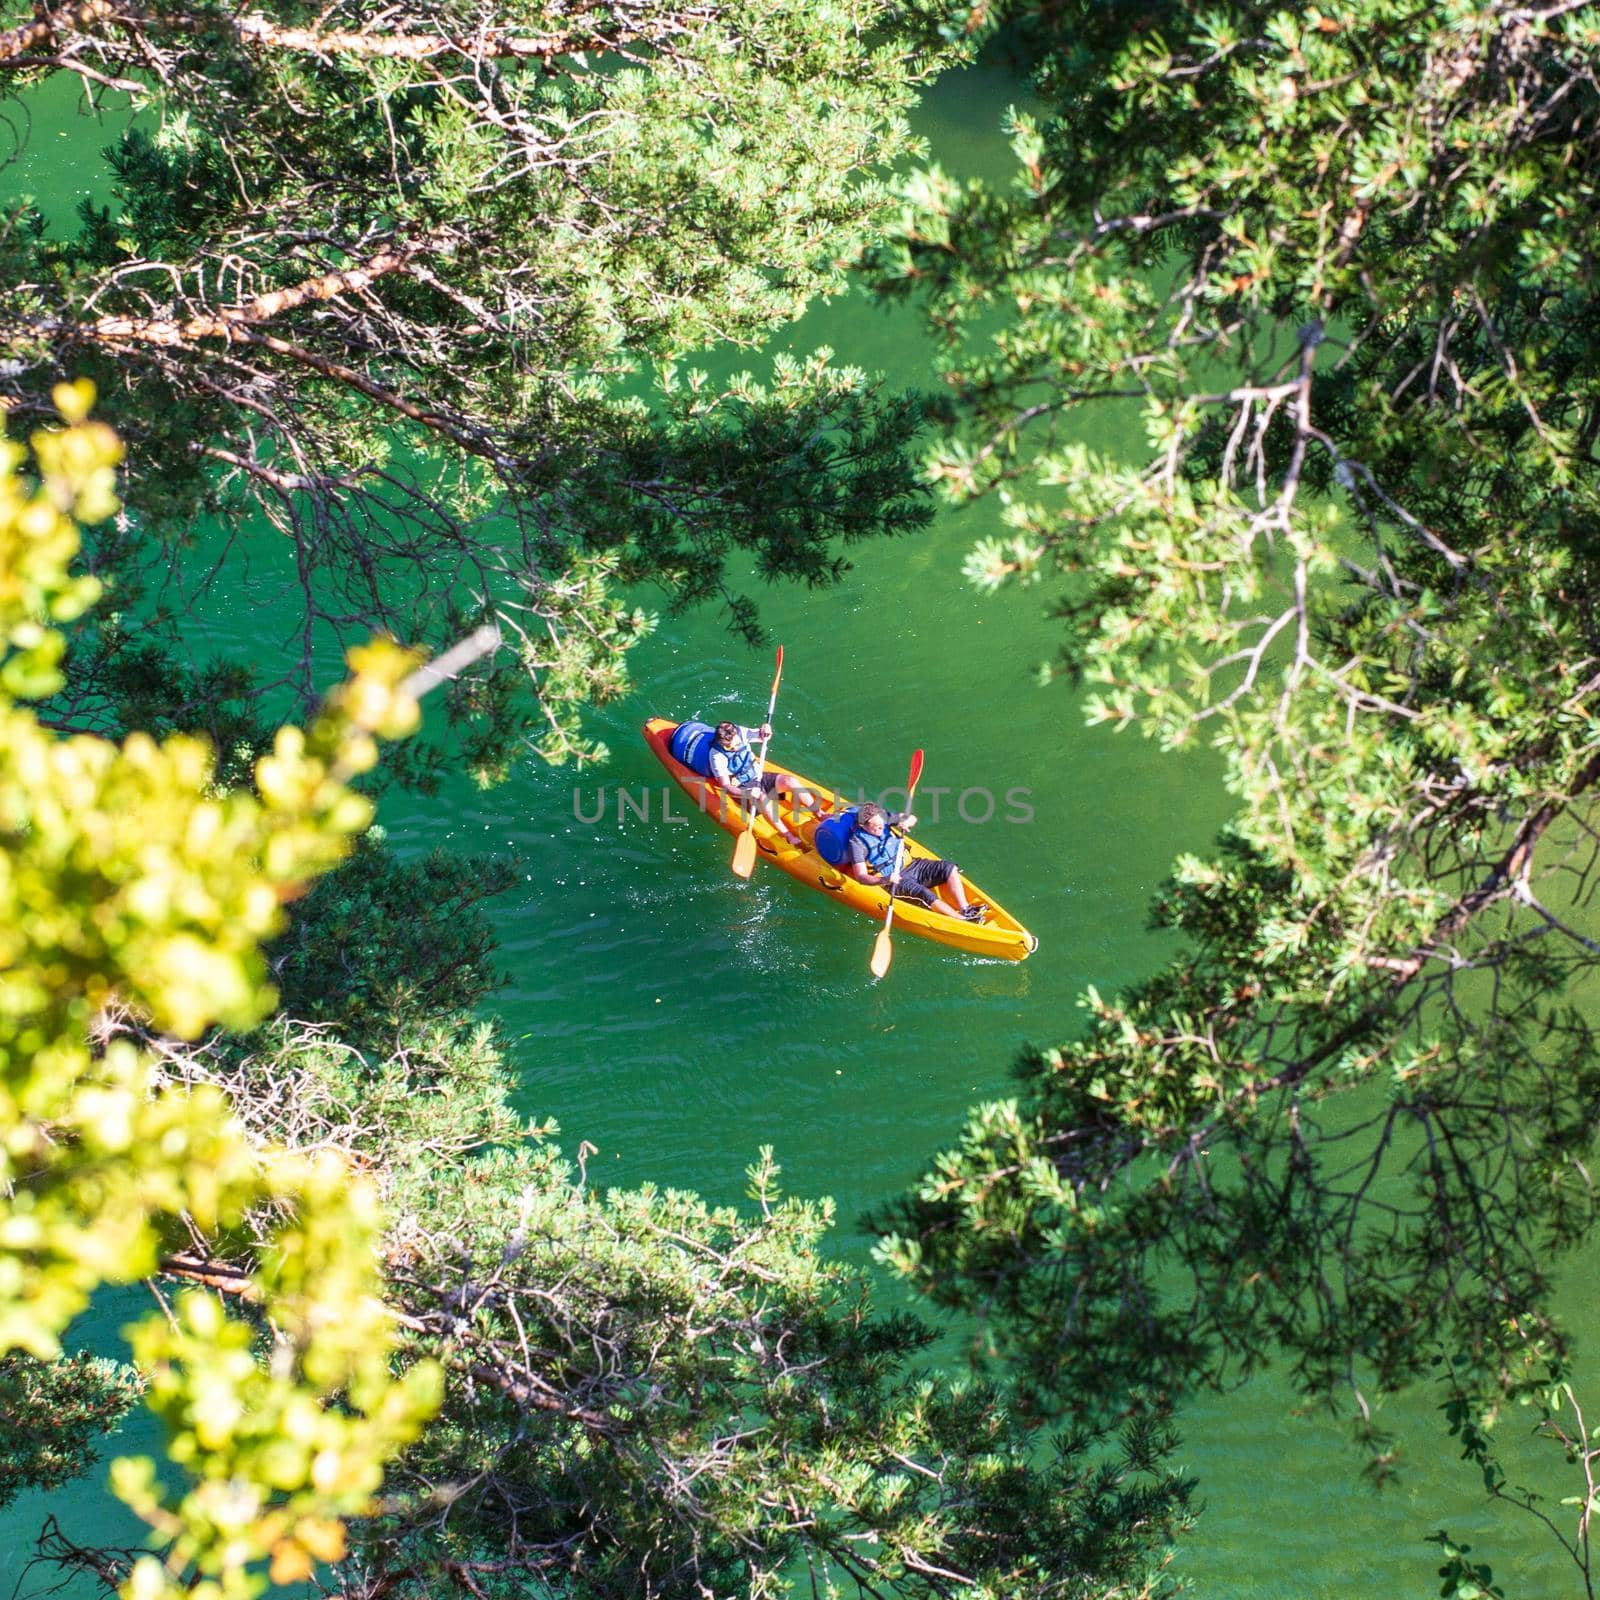 Orange canoe-kayak seen through the trees by Tilo